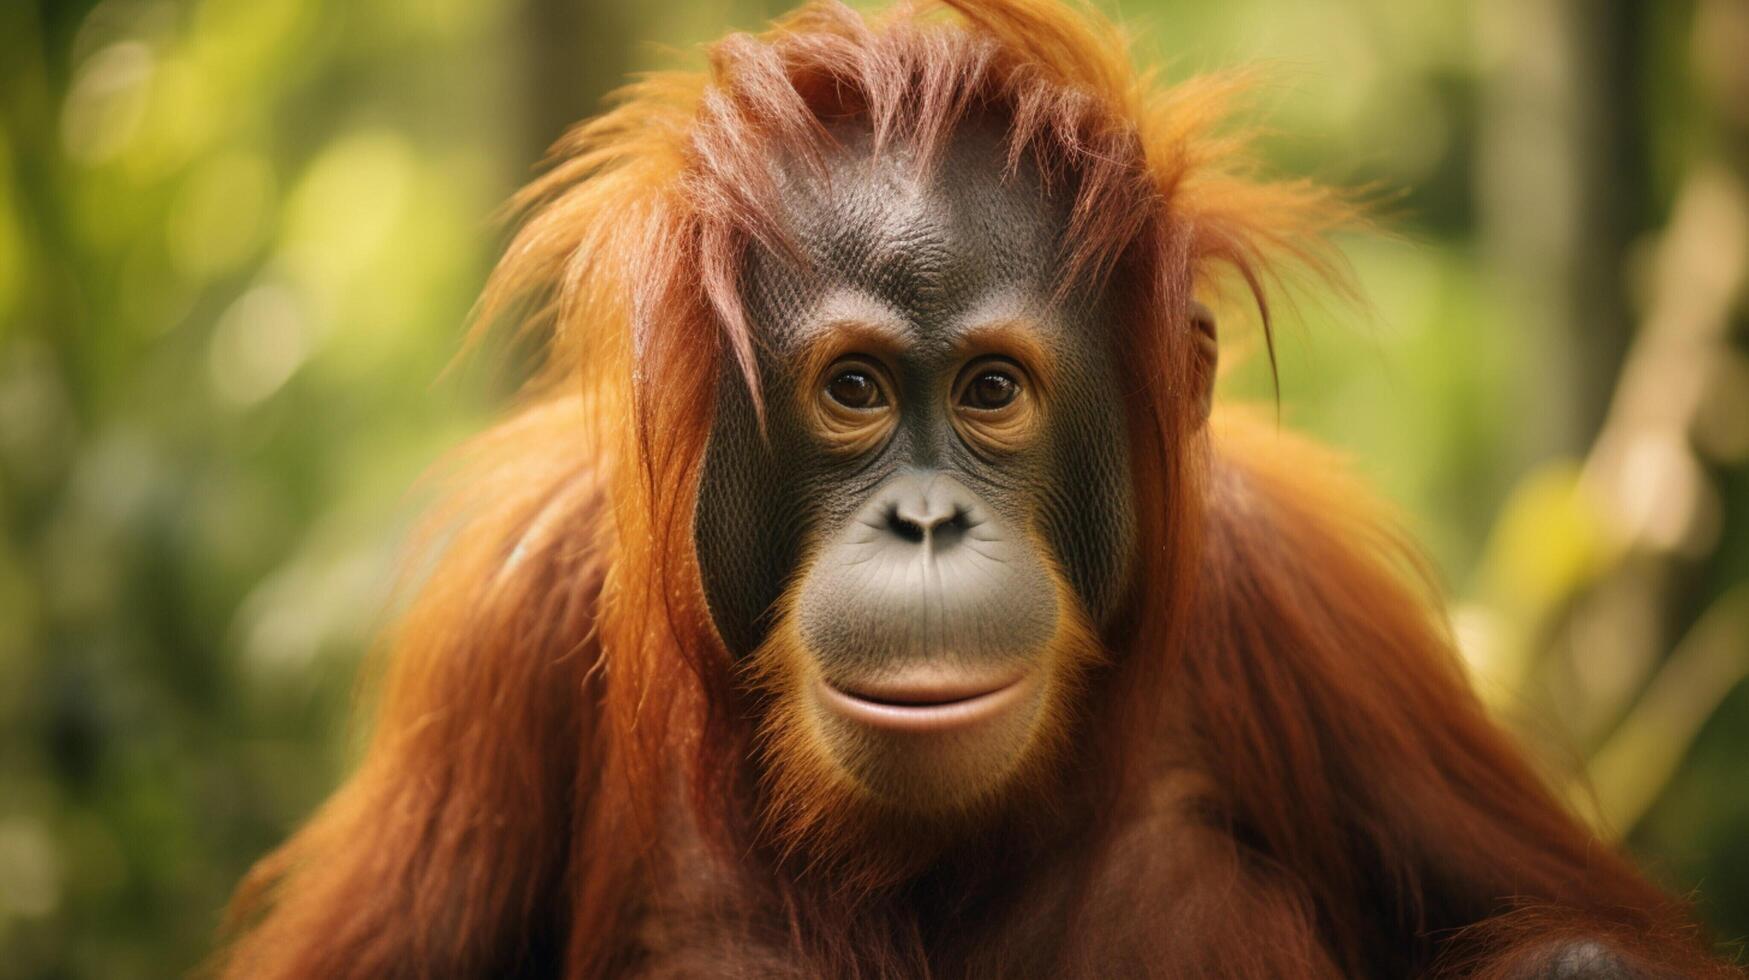 ai gegenereerd orangoetan hoog kwaliteit beeld foto